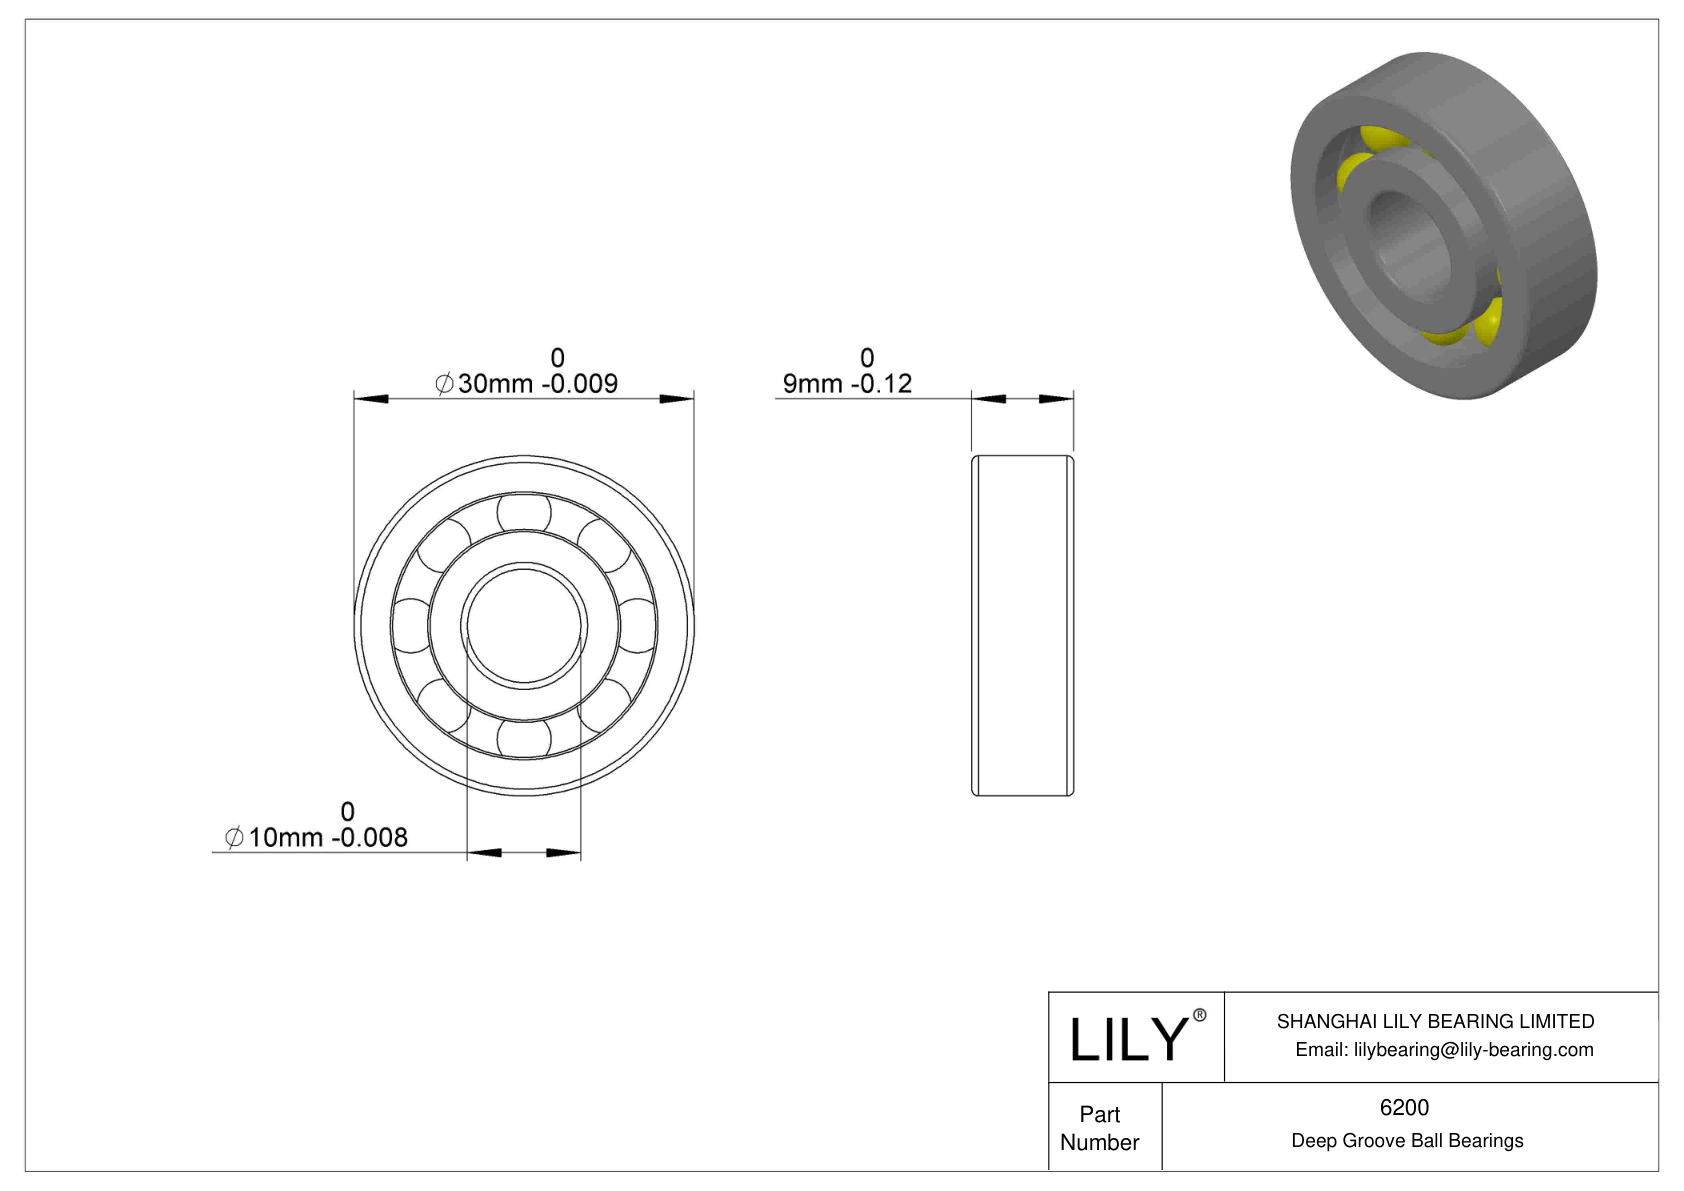 LILY-PU620050-12 Polyurethane Coated Bearing cad drawing